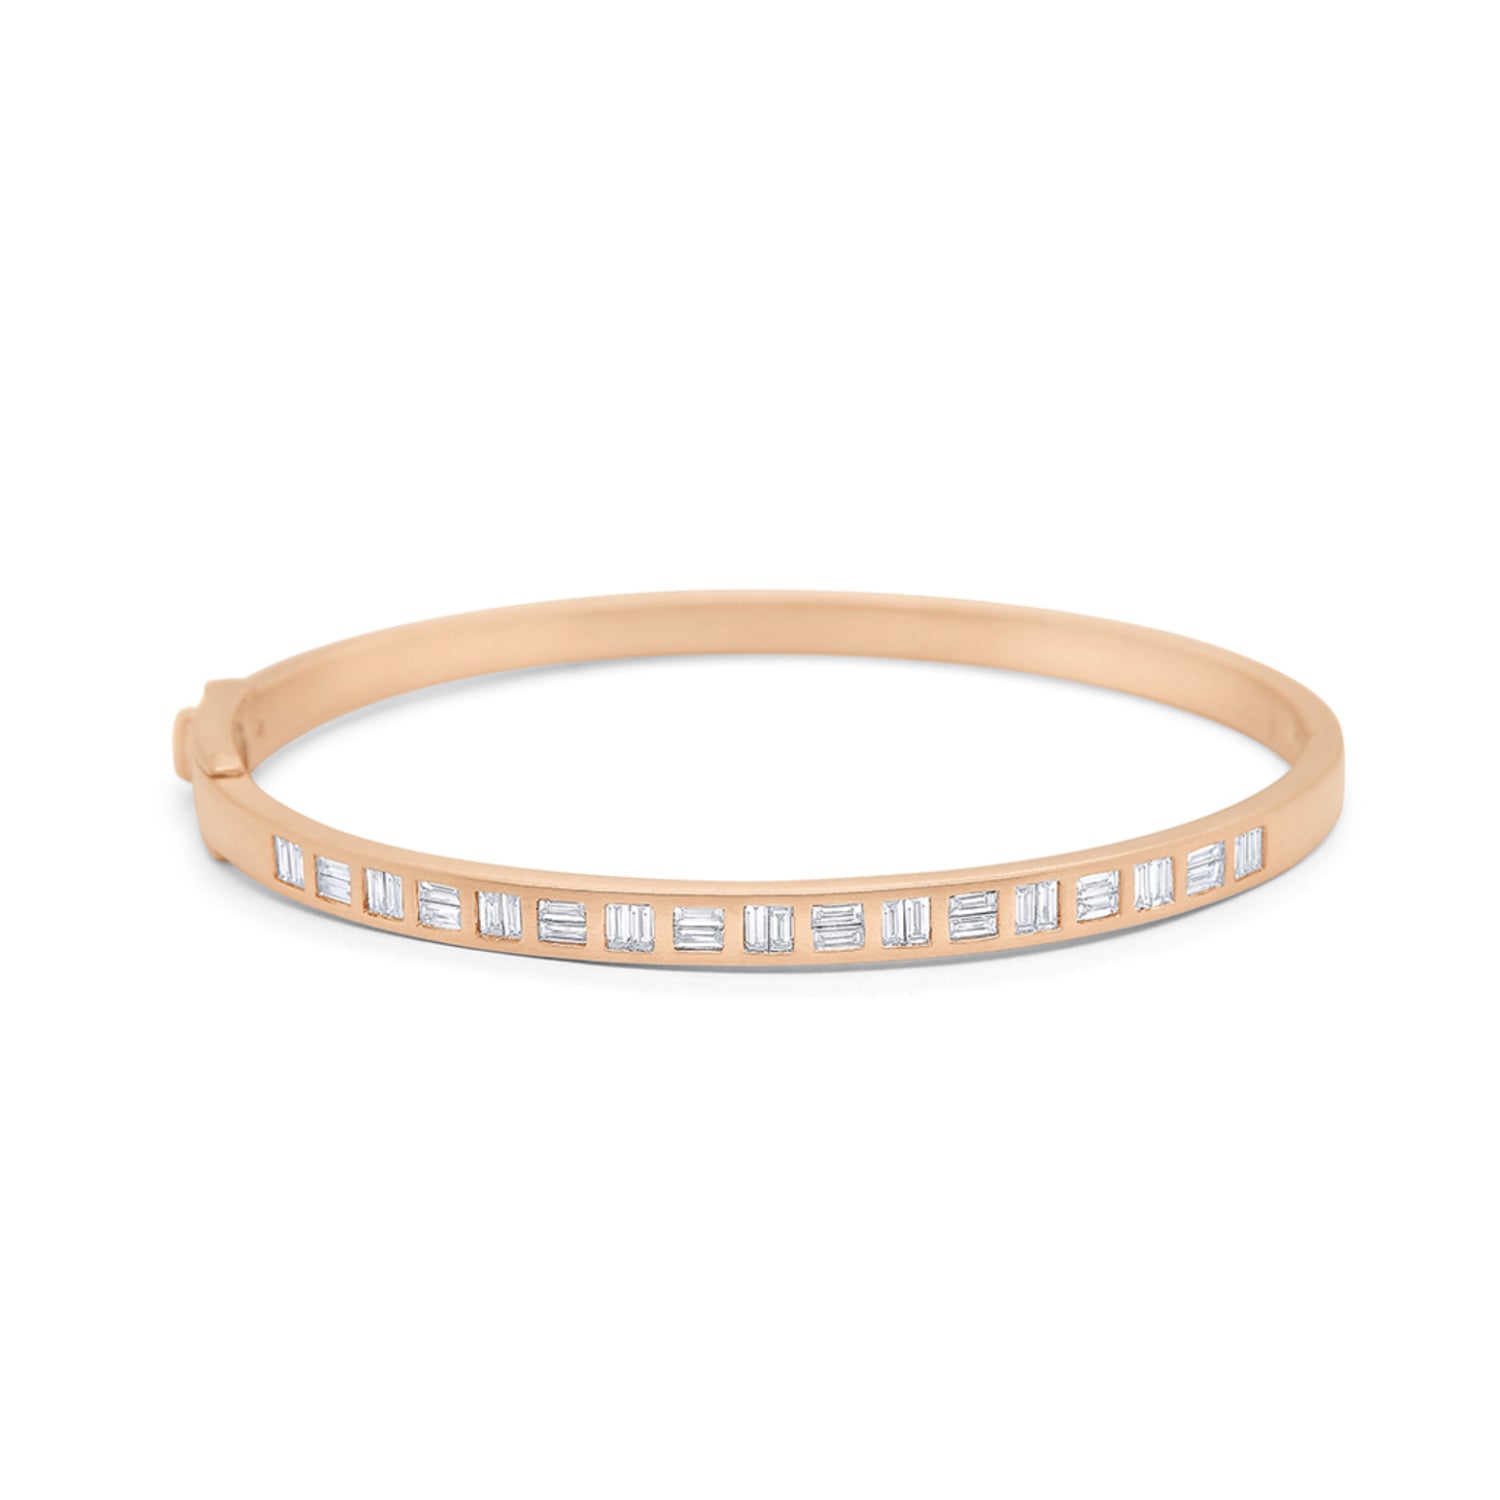 Baguette Cut Diamond Bangle Bracelet in Rose Gold